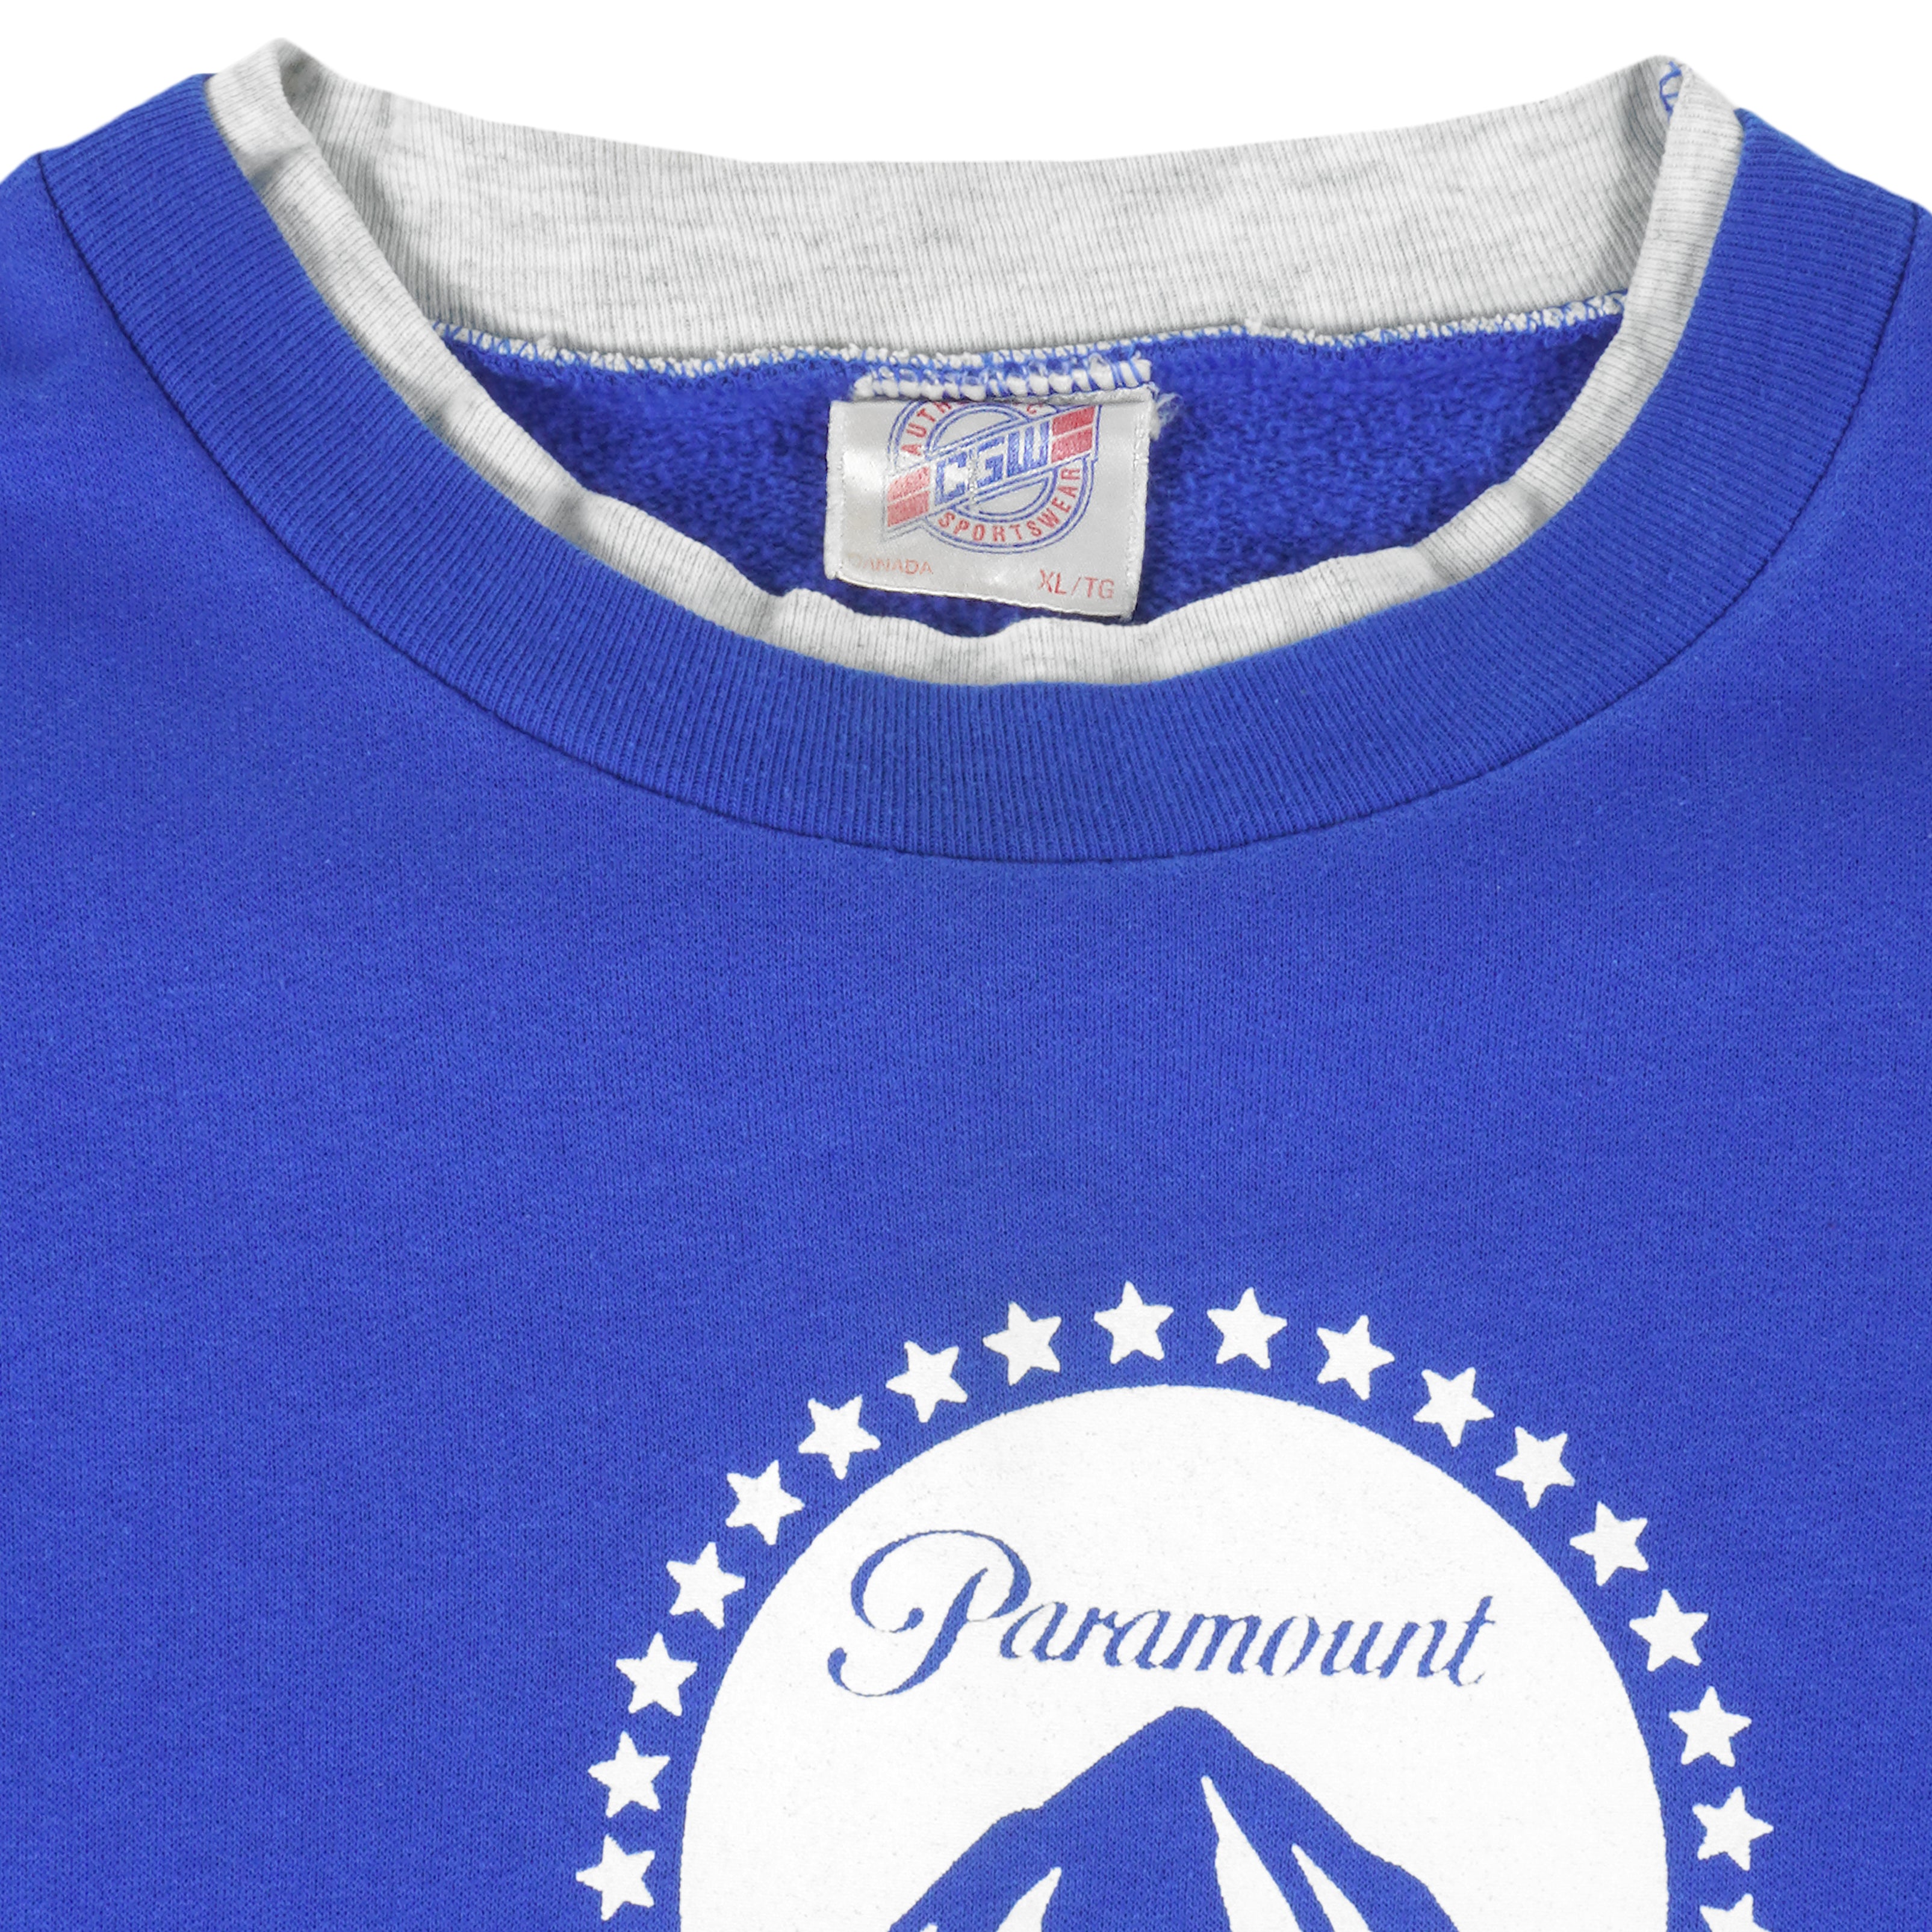 Vintage (CGW) - Paramount Canada's Wonderland Crew Neck Sweatshirt